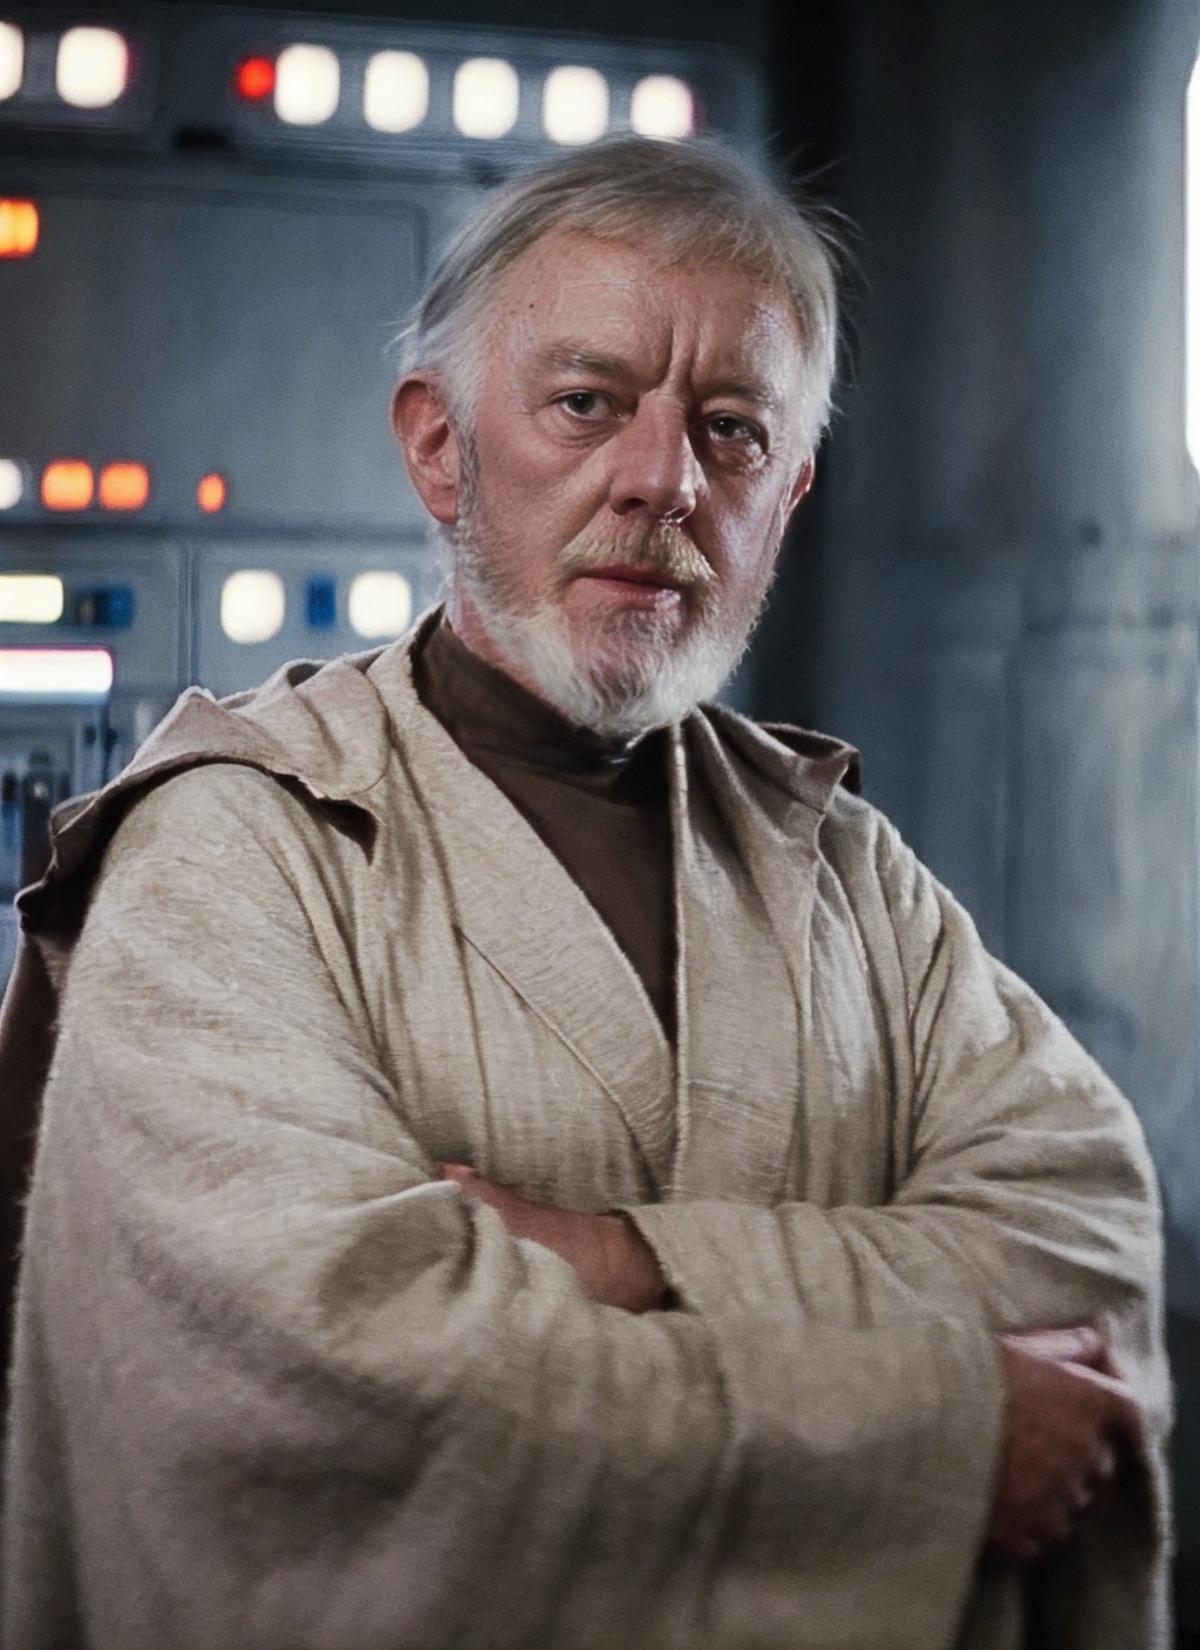 Obi Wan Kenobi (in loving memory of Sir Alec Guinness) image by astragartist